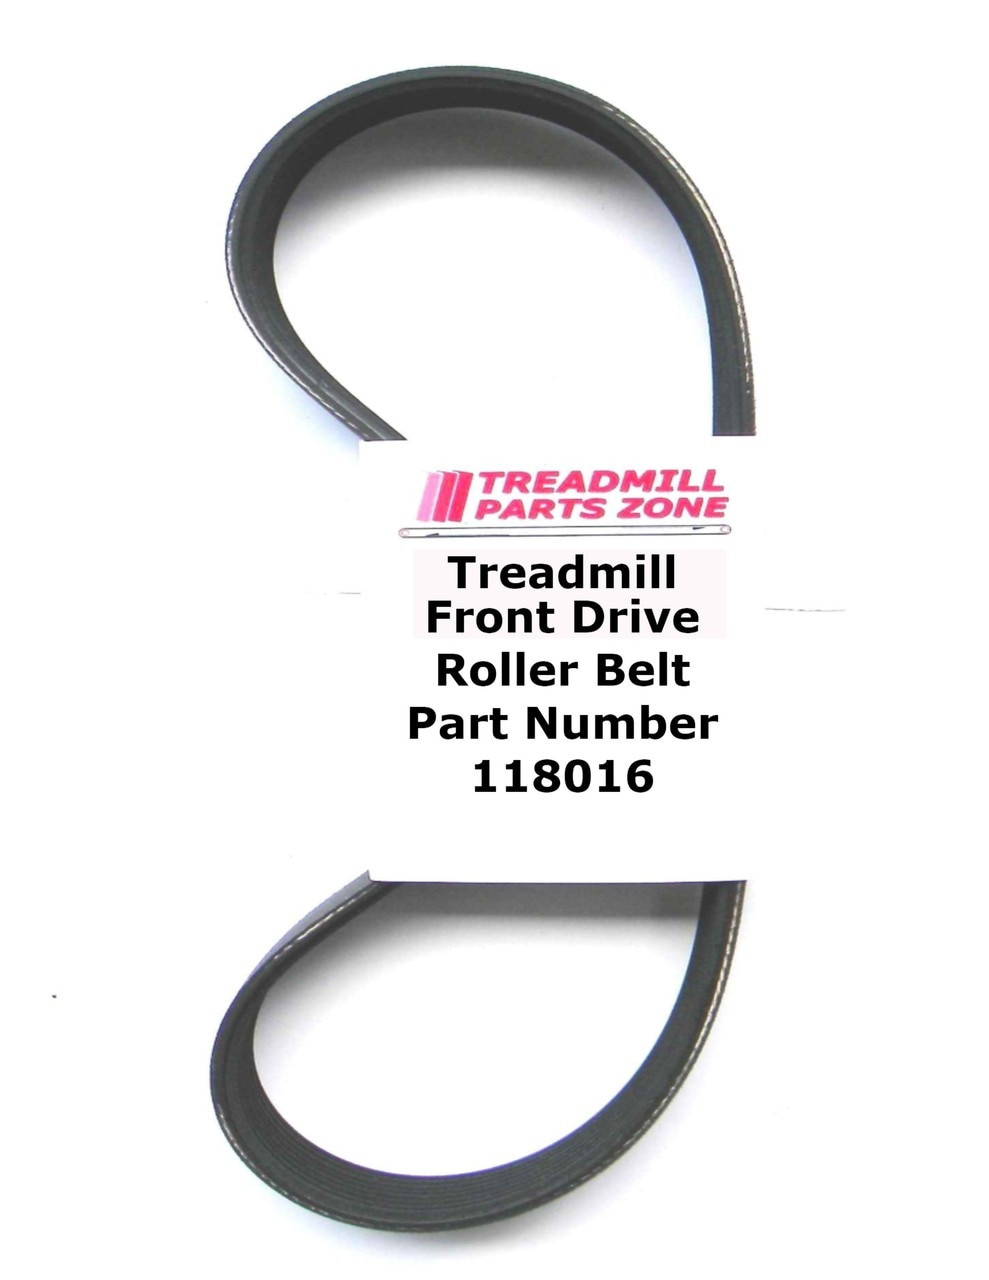 PROFORM 395CW TREADMILL MODEL PFTL10310 Motor Belt Part Number 118016